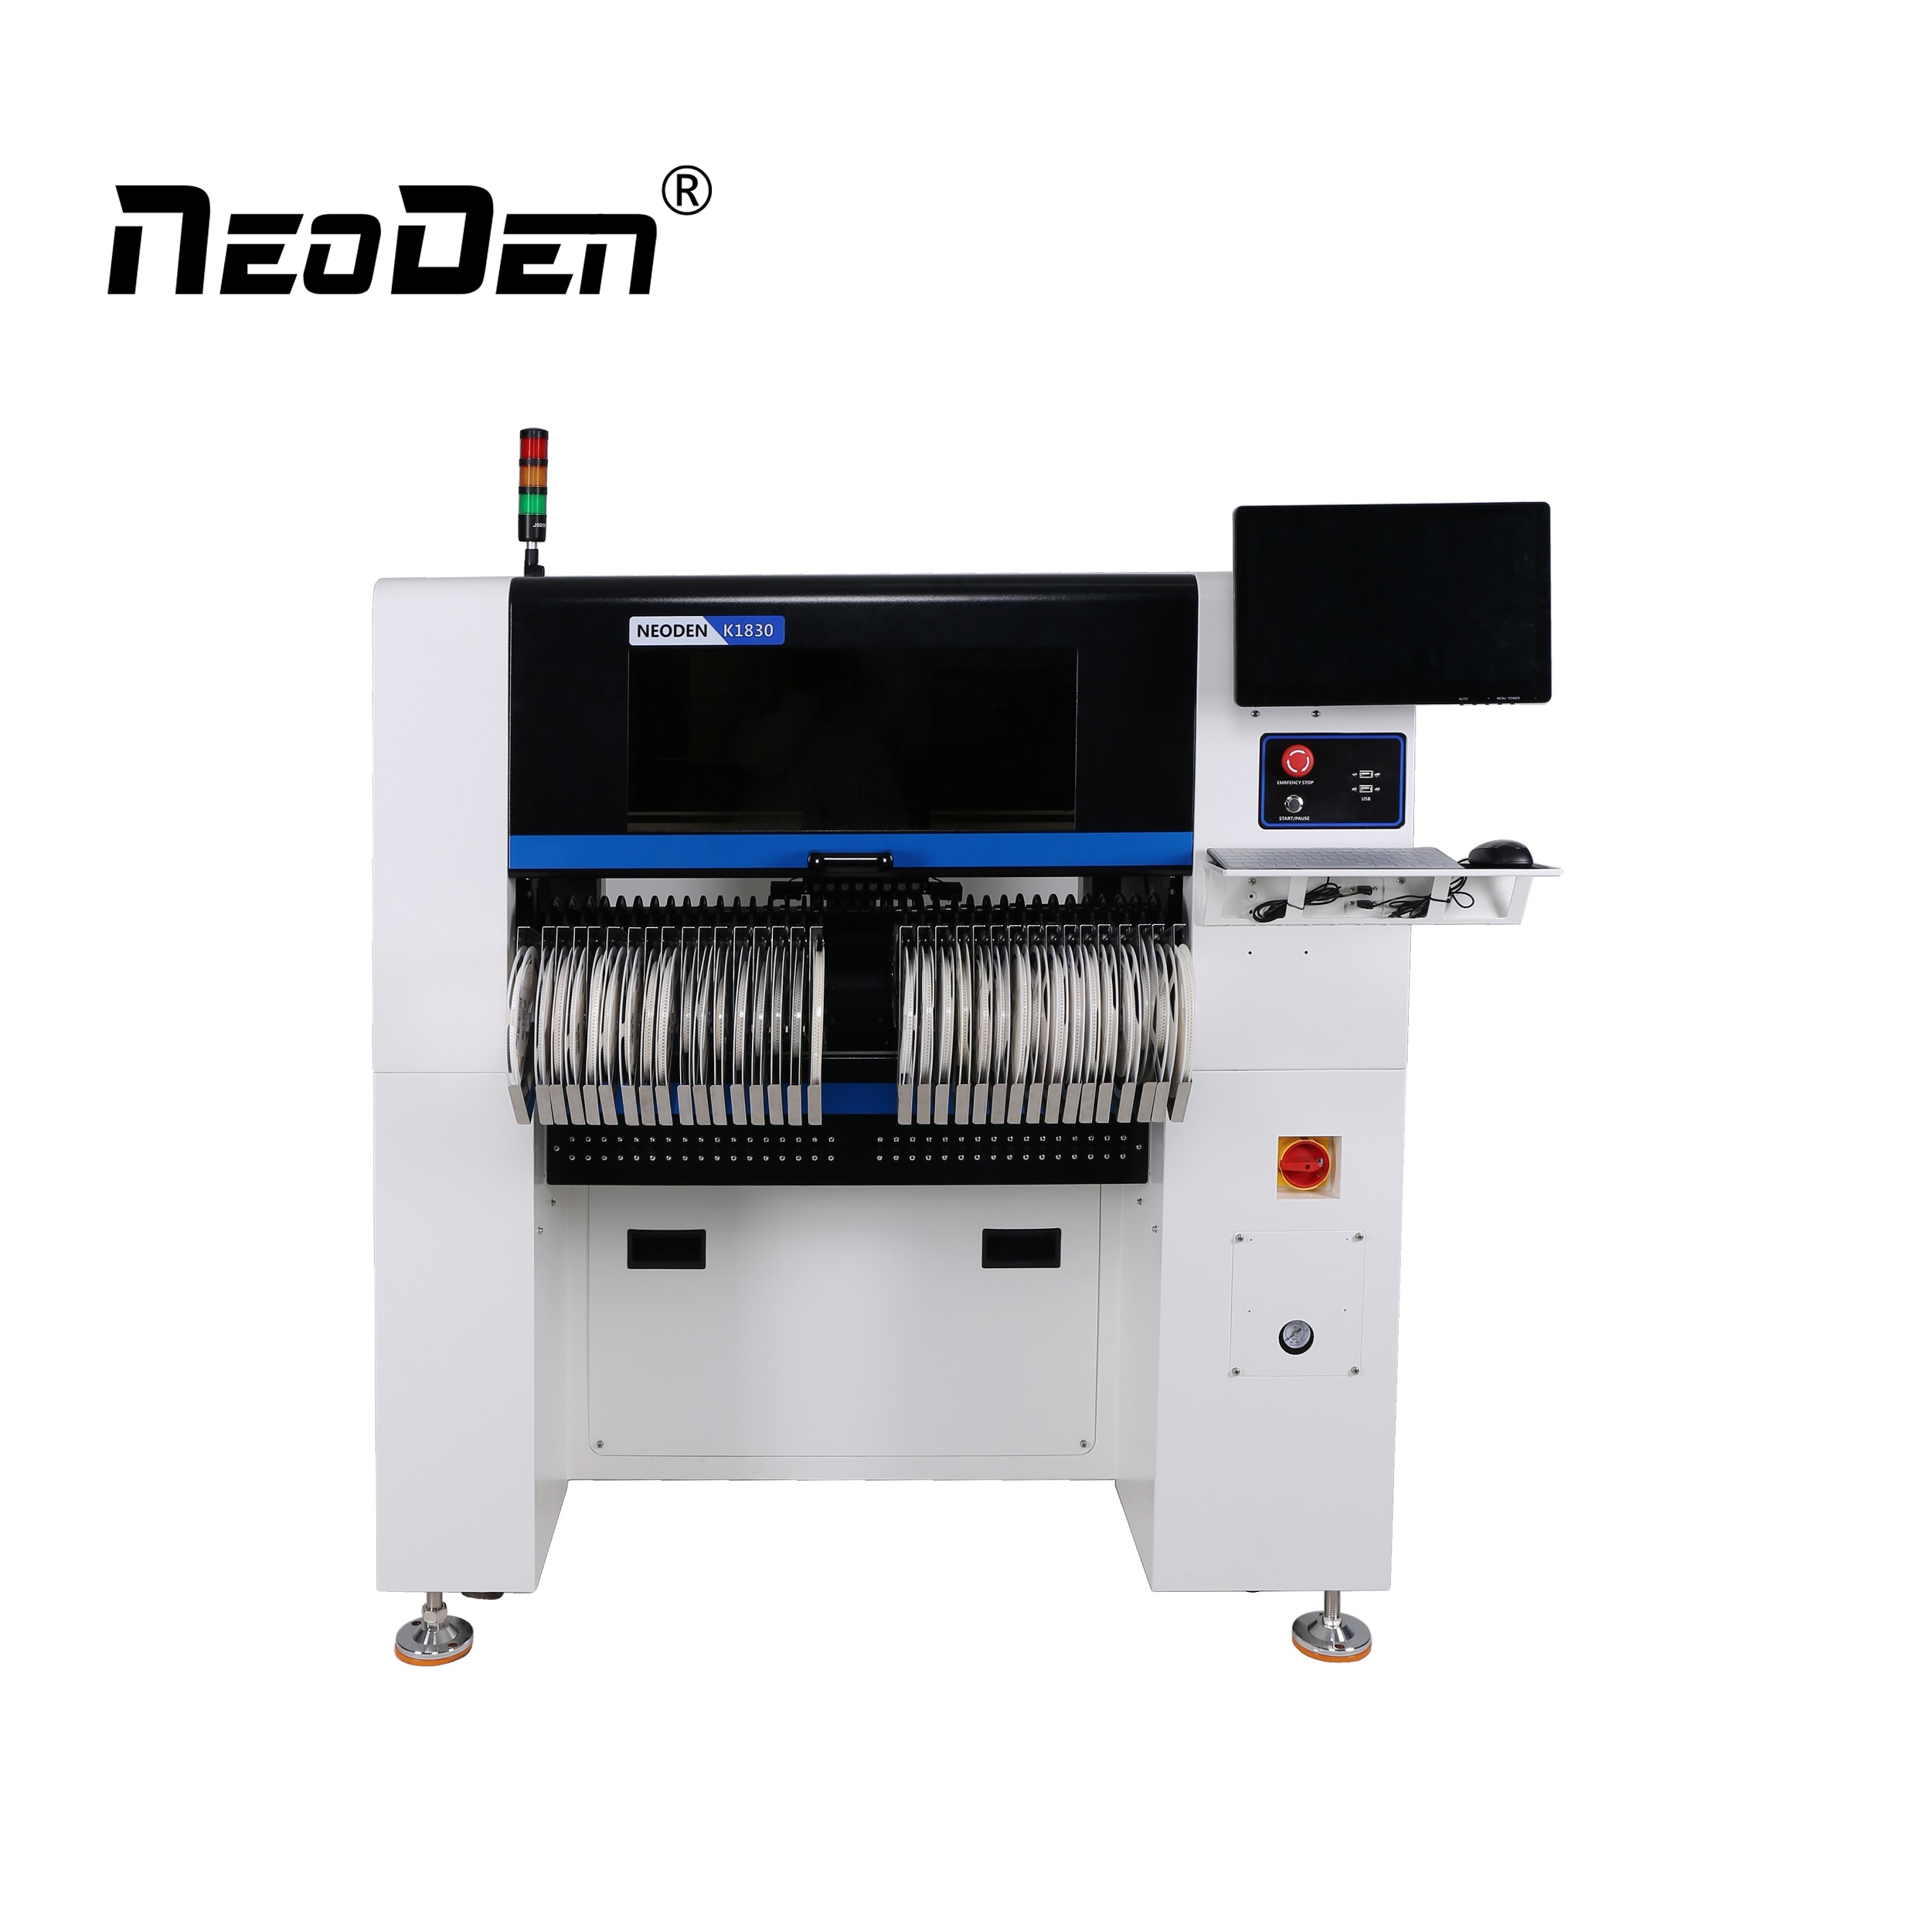 OEM China Smd Automatic Pick And Place Machine - Smt Mounter Machine NeoDen K1830 – Neoden